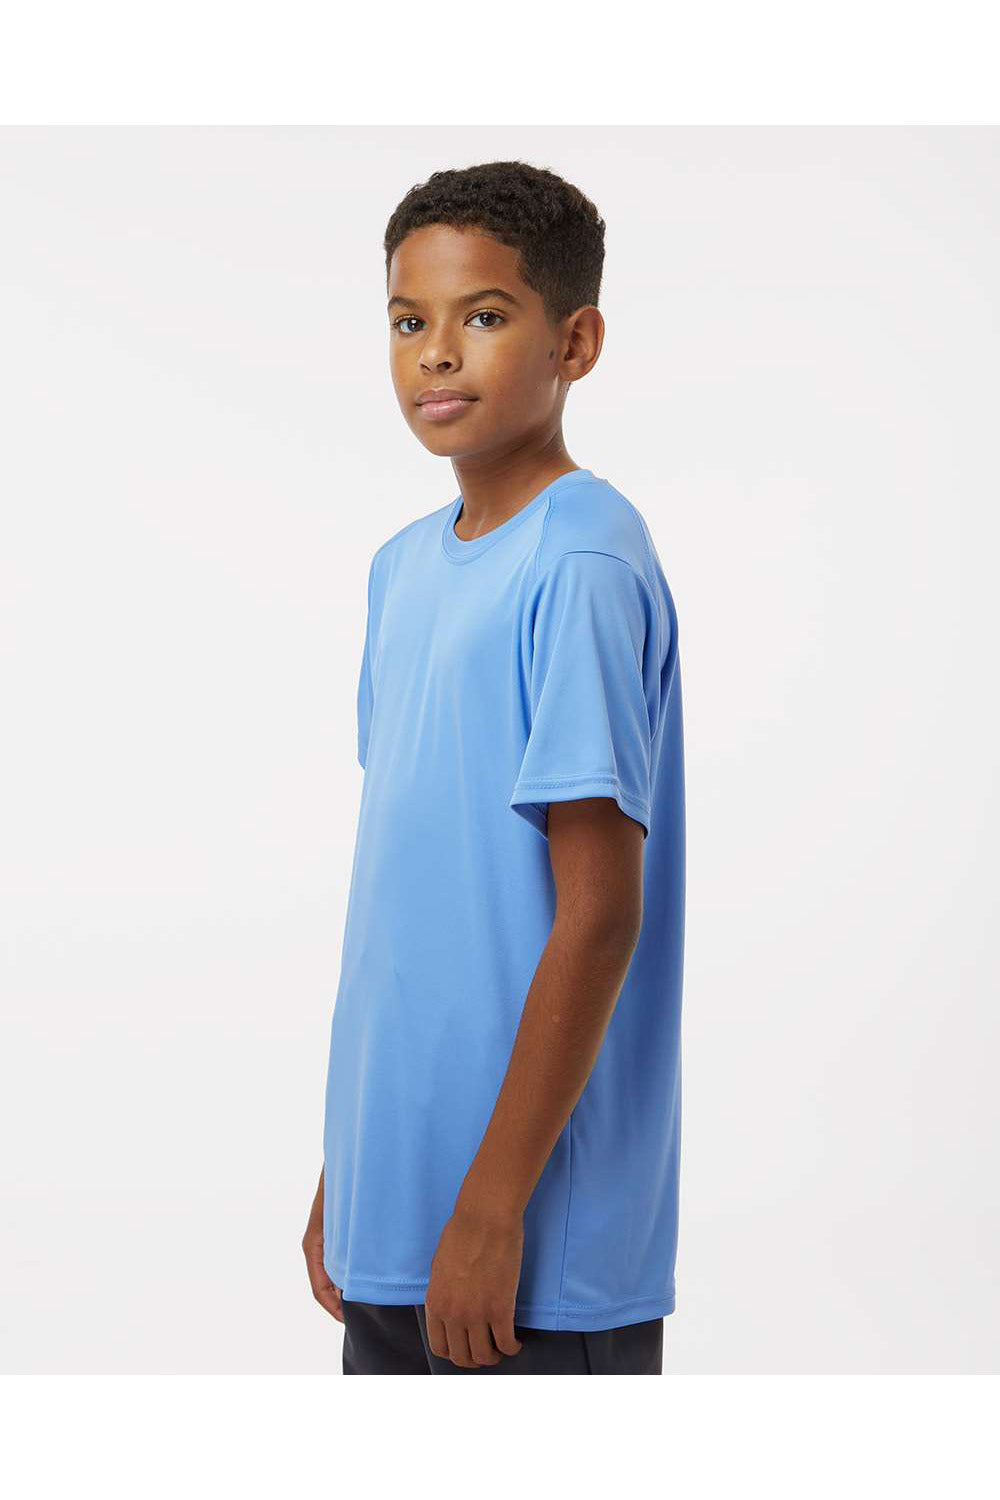 Paragon 208Y Youth Islander Performance Short Sleeve Crewneck T-Shirt Bimini Blue Model Side